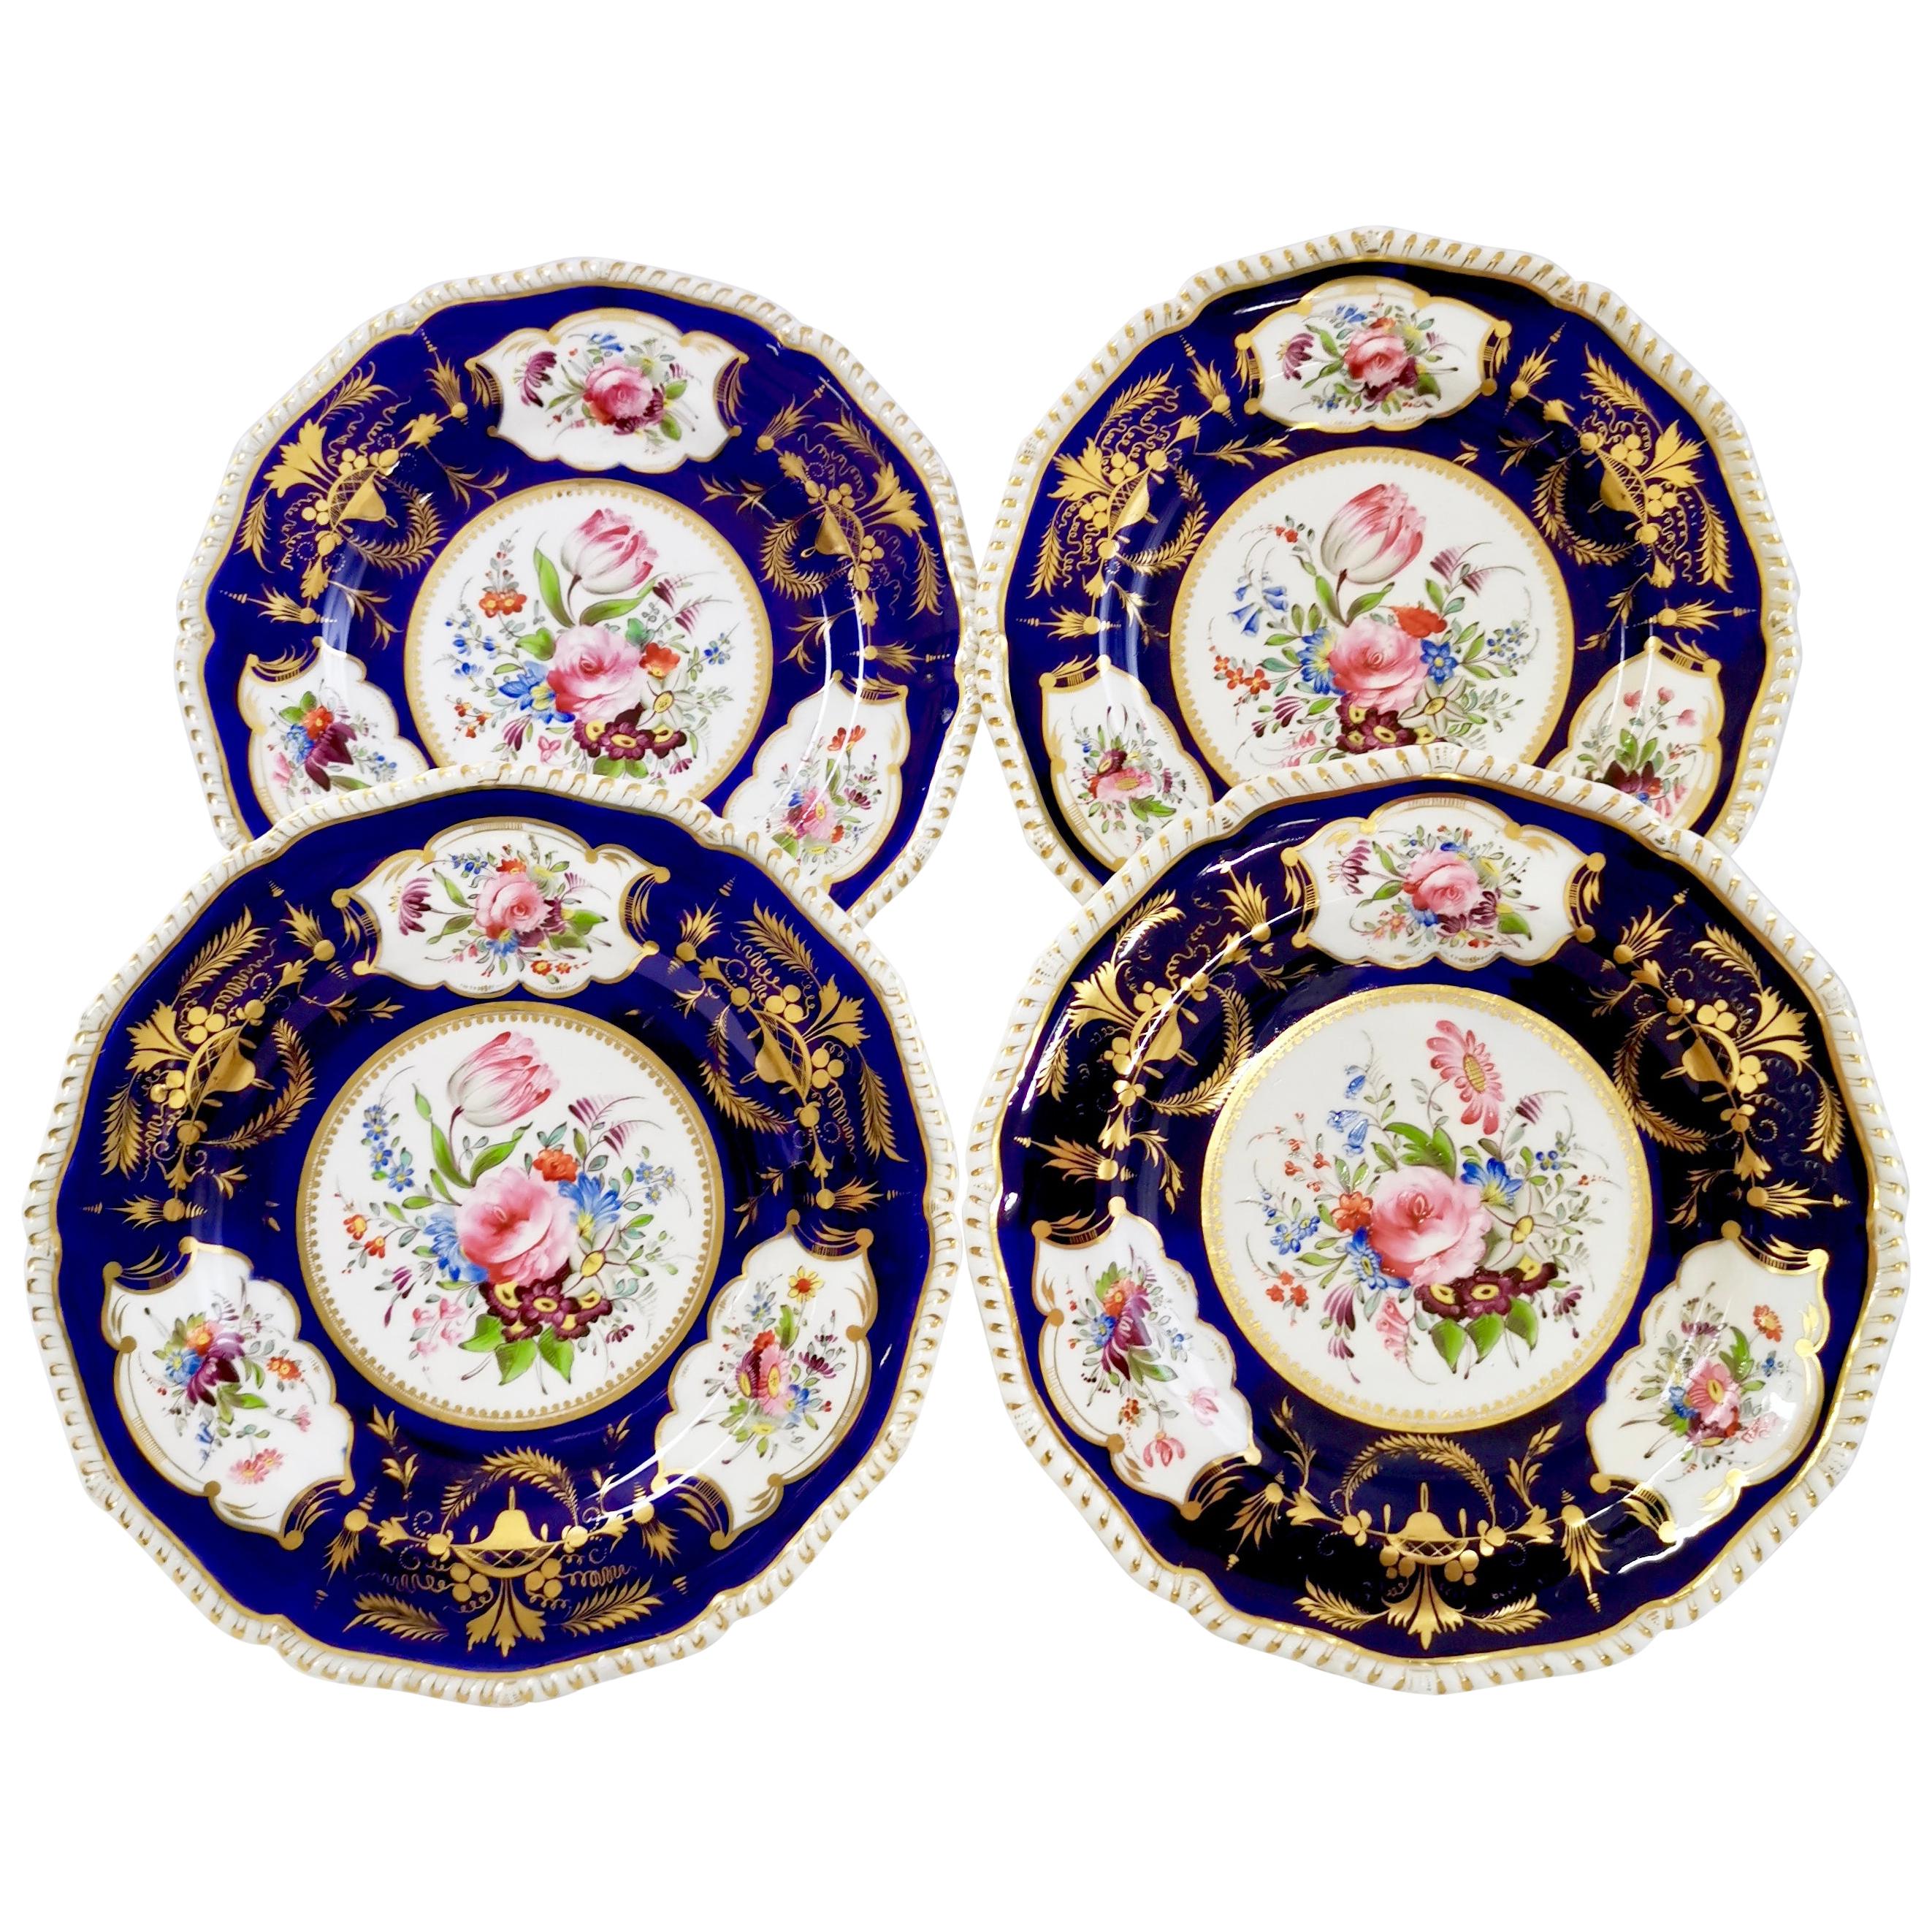 Set of 4 Bloor Derby Dinner Plates, 1825-1830